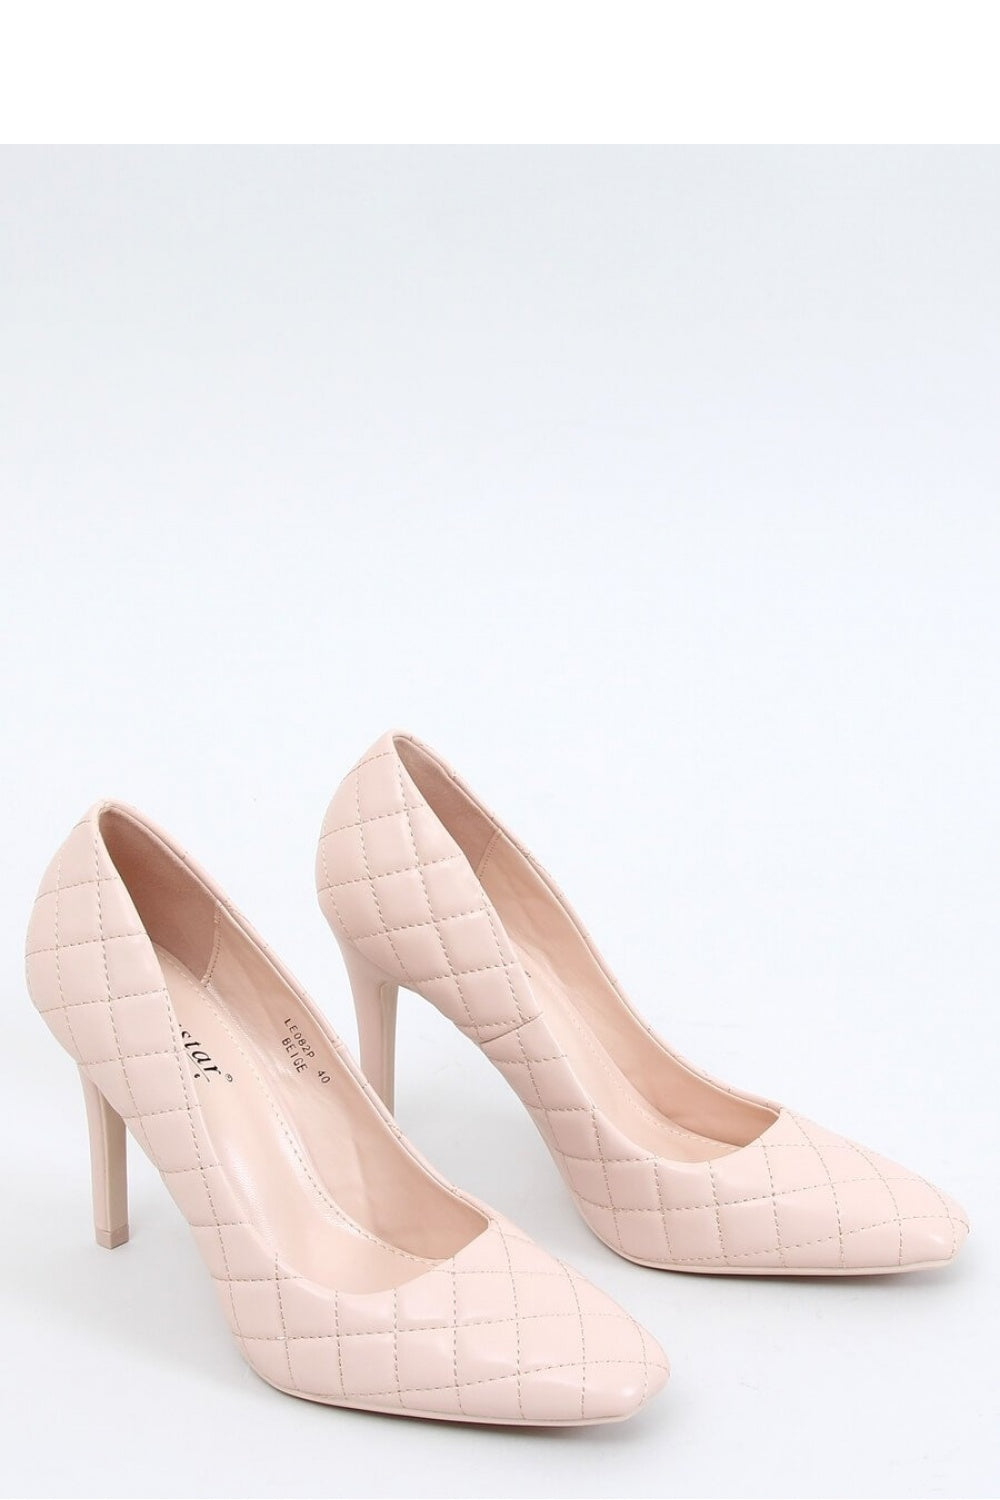 High heels model 152255 Inello Posh Styles Apparel